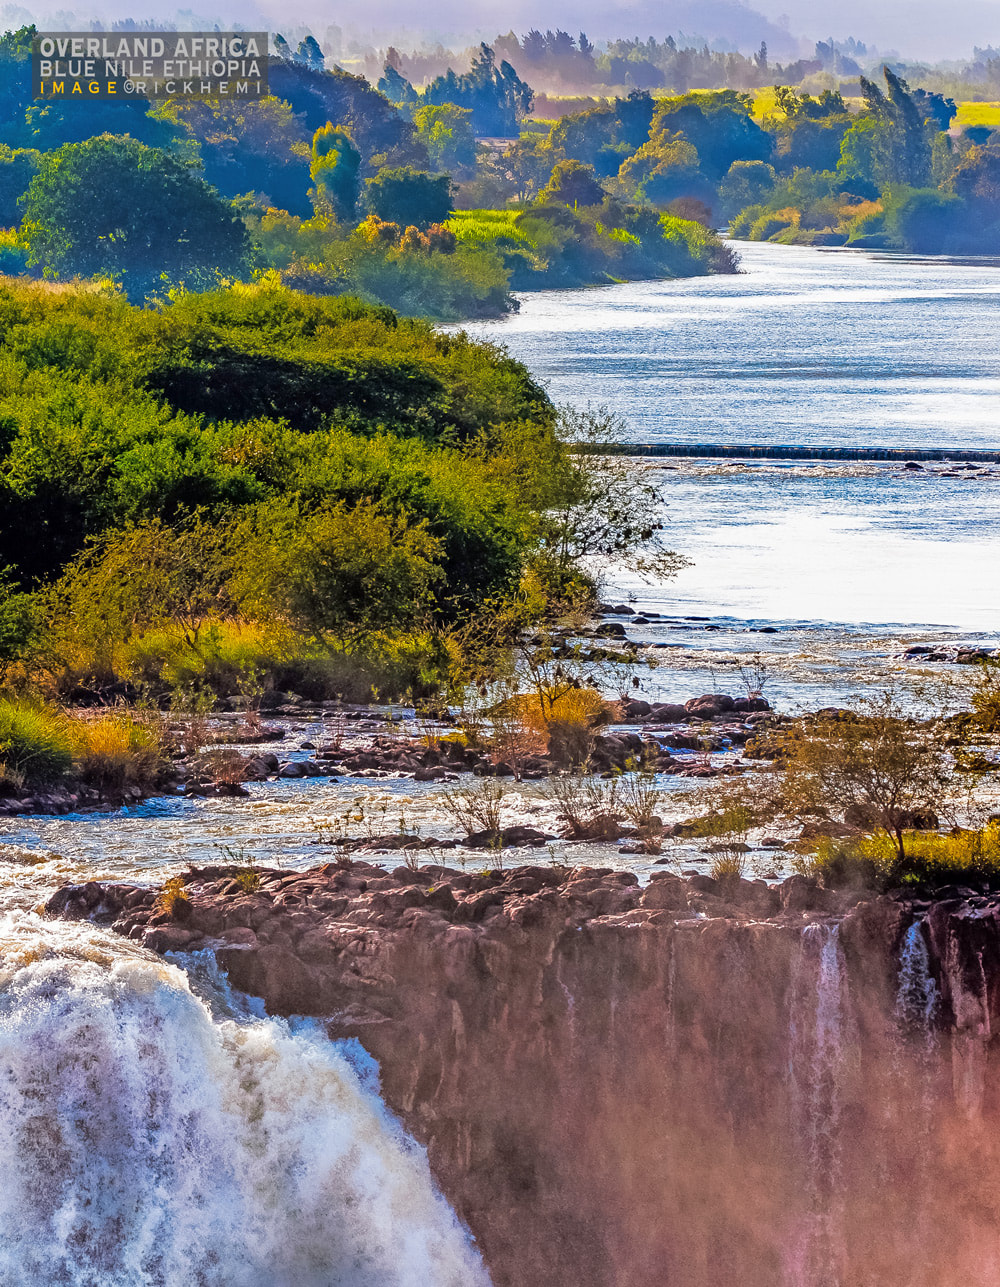 solo overland travel Africa, Blue Nile Ethiopian highlands, image by Rick Hemi